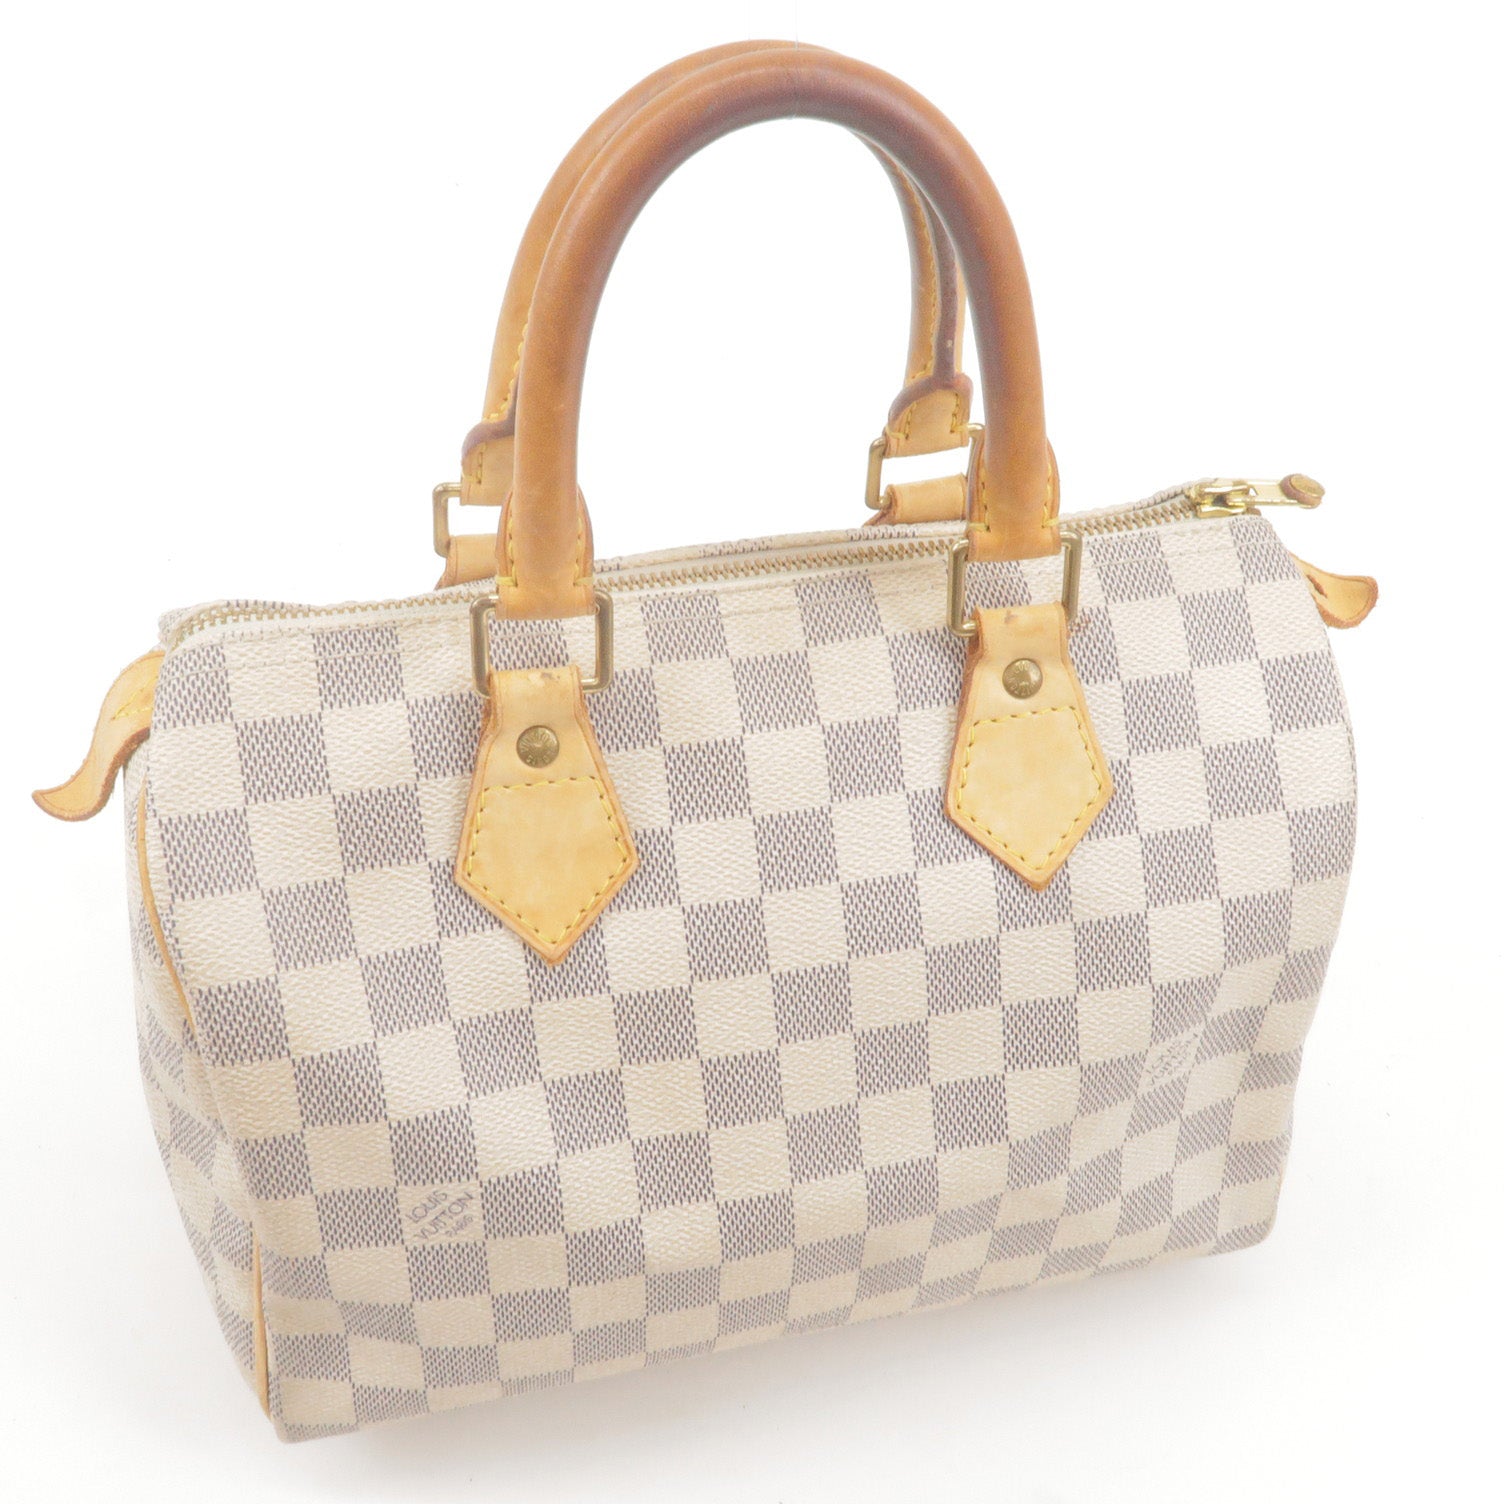 Louis Vuitton Petite Malle Handbag Limited Edition Tribal Print Leather